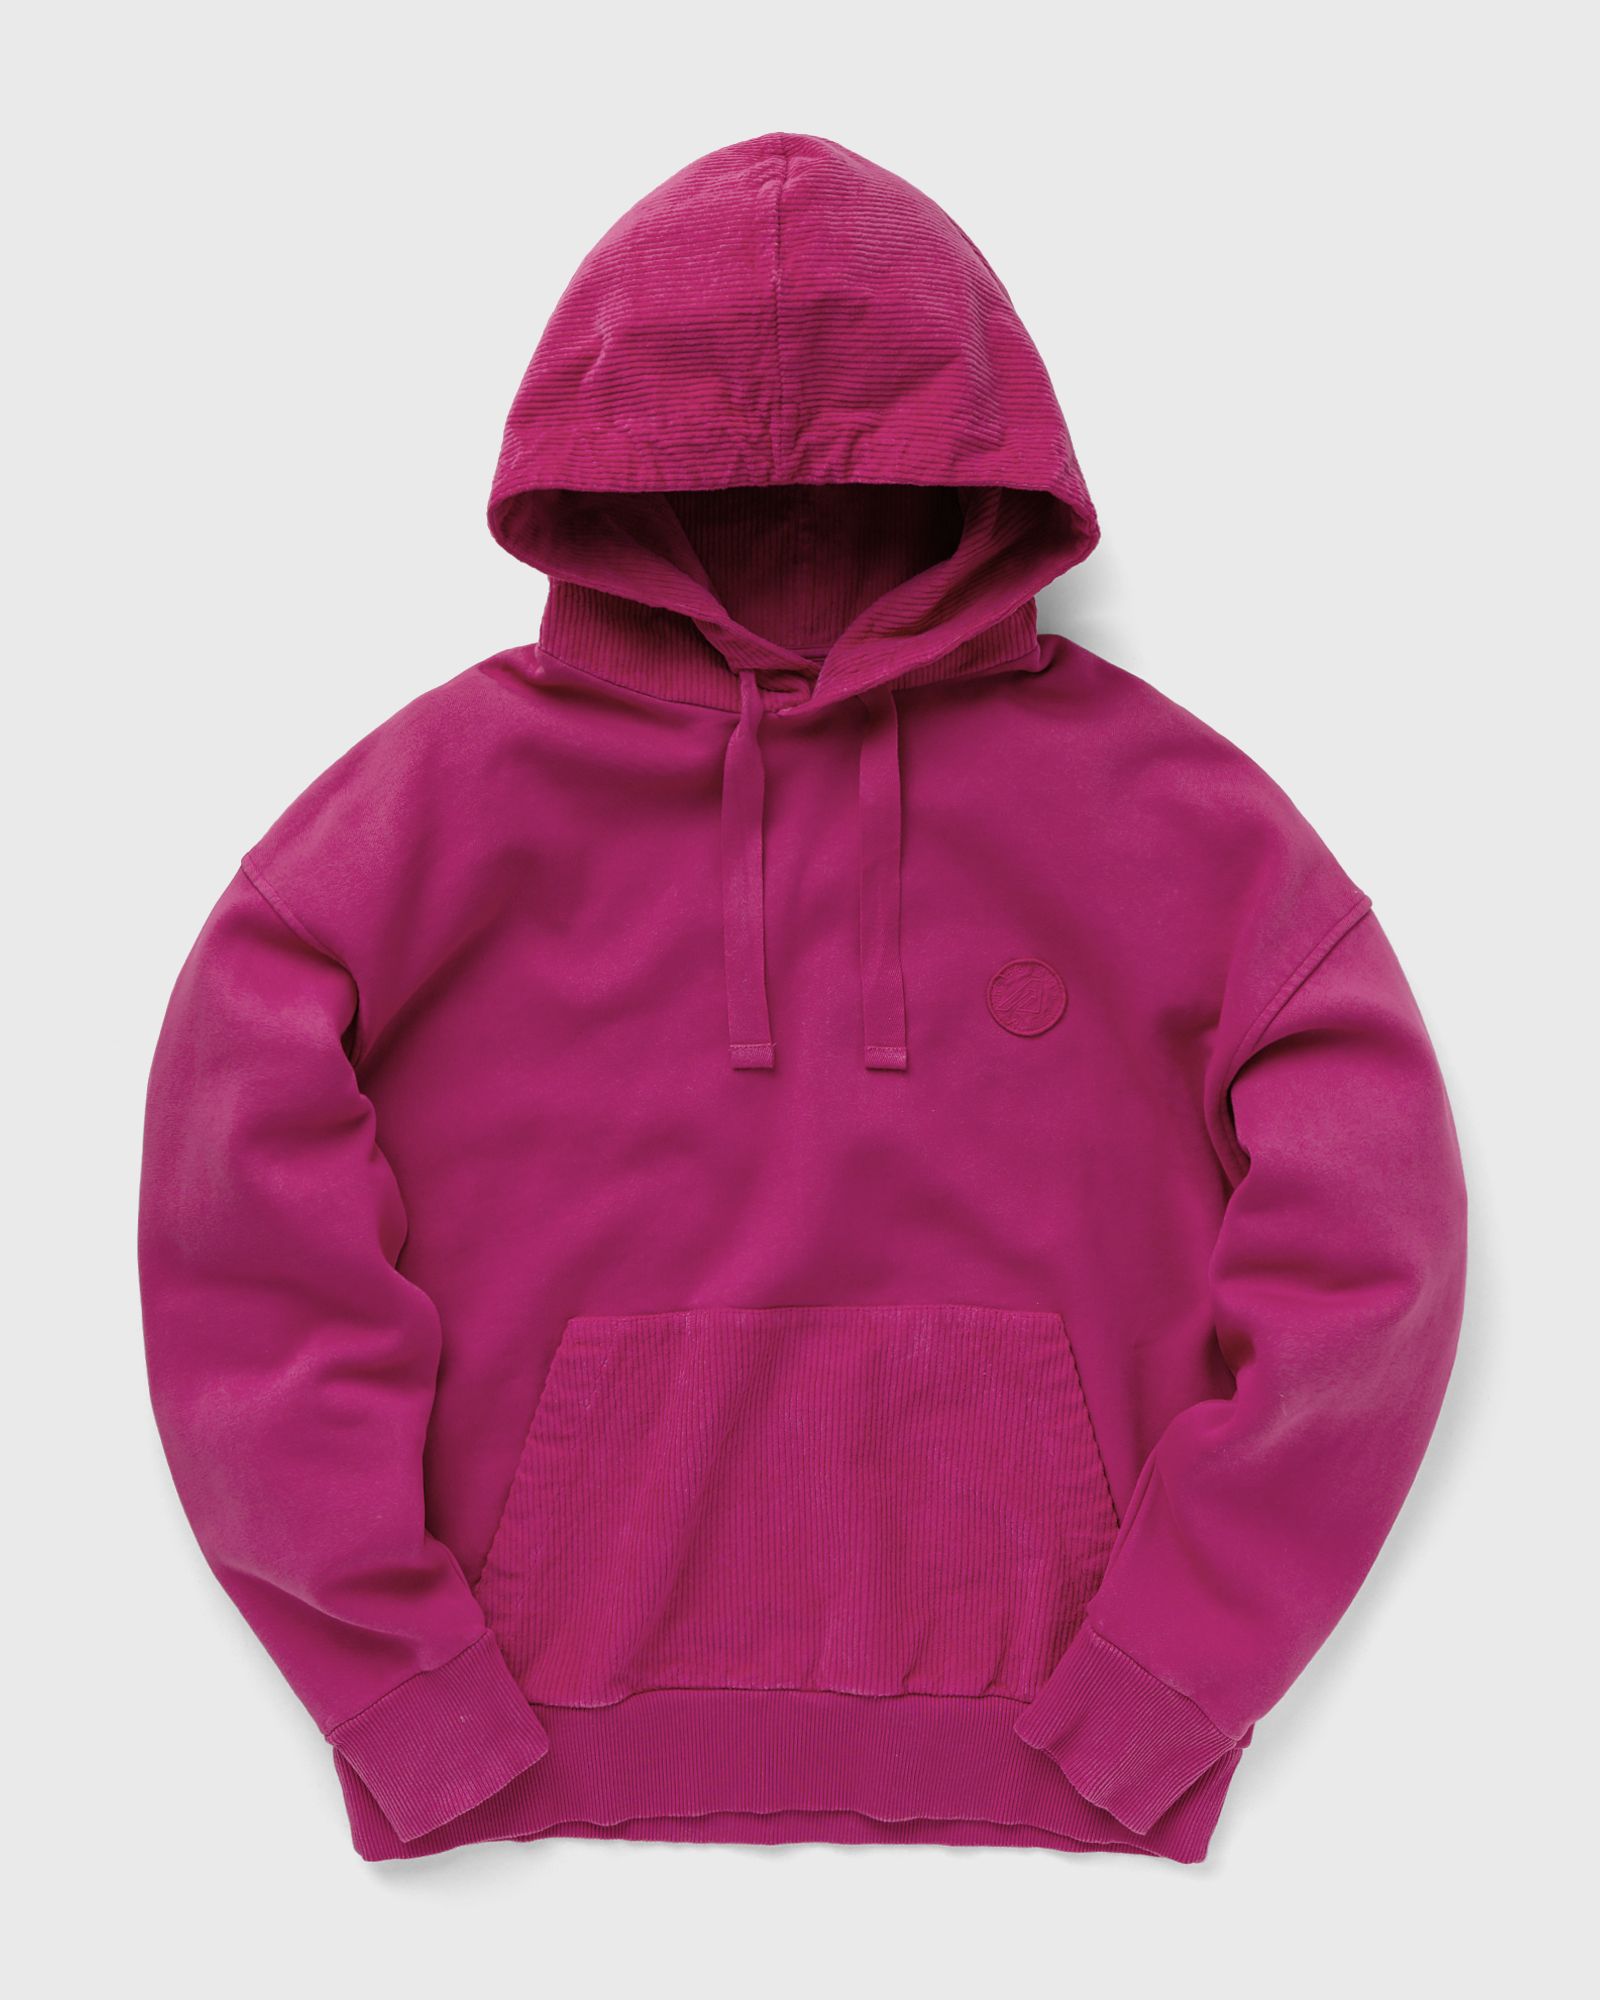 Autry Action Shoes - wmns hoodie velvet women hoodies pink in größe:l